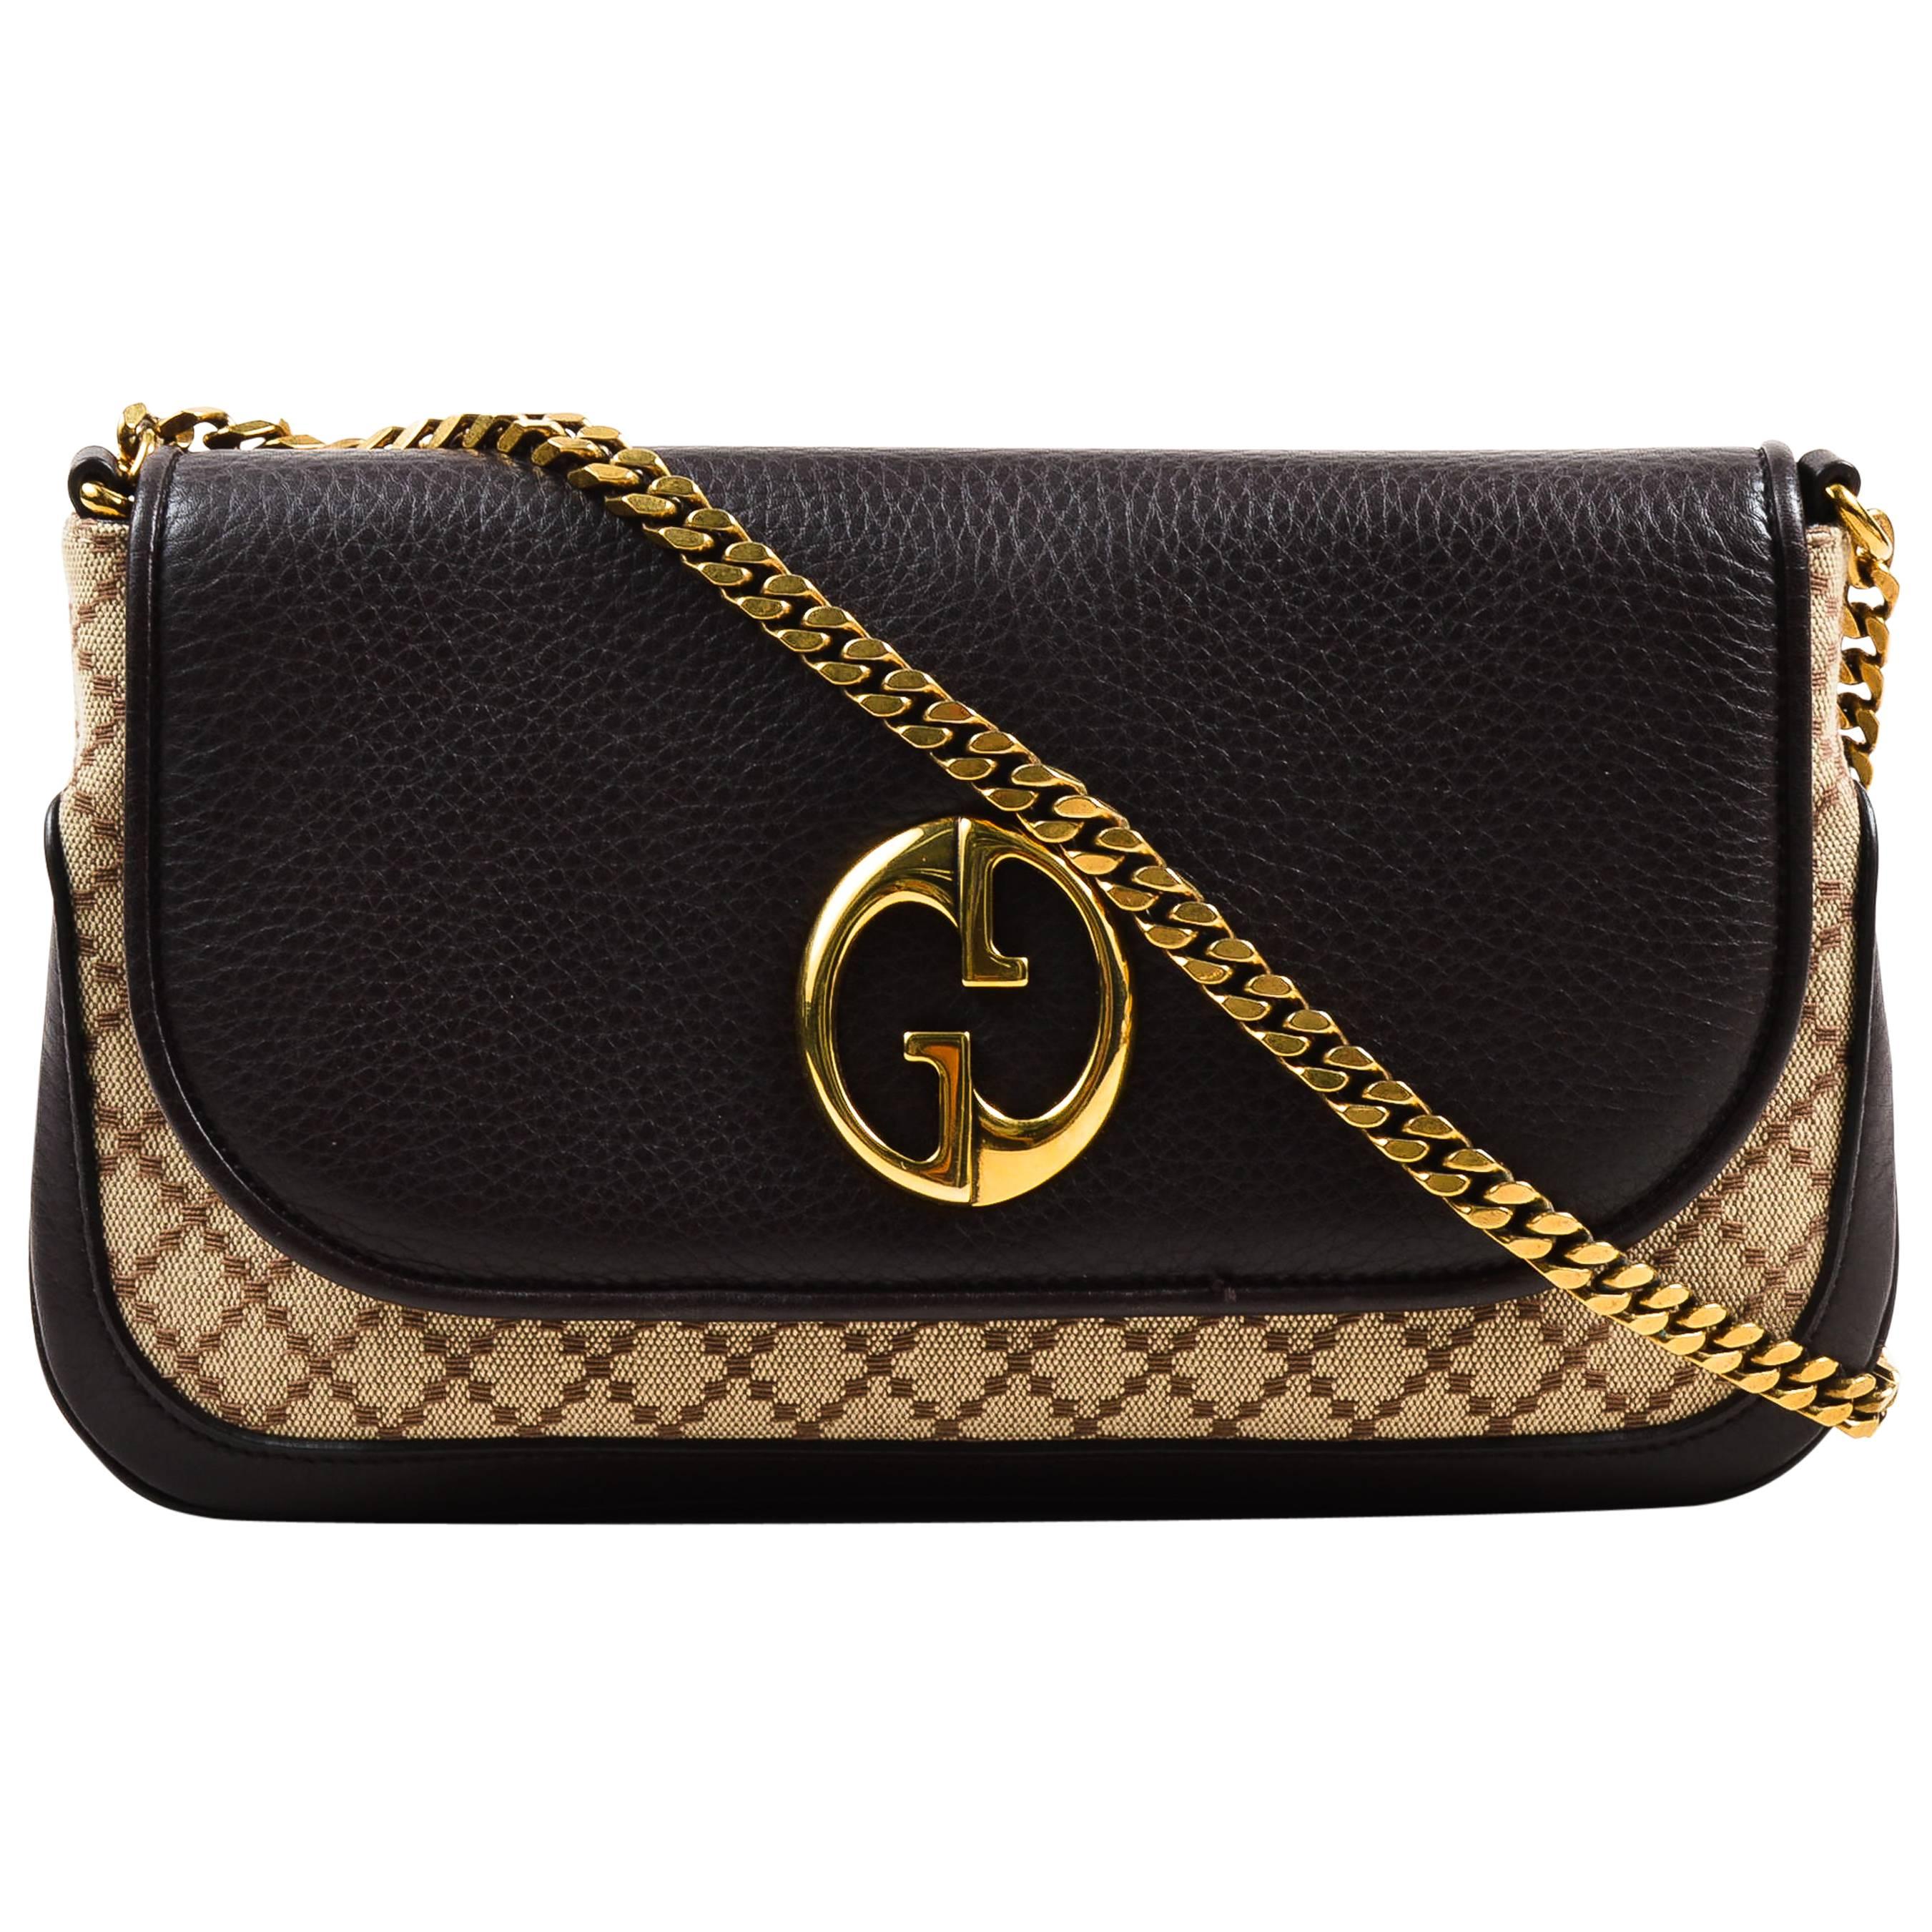 Gucci Brown Tan Leather "Diamante" Canvas "1973" Collection Handbag Purse For Sale